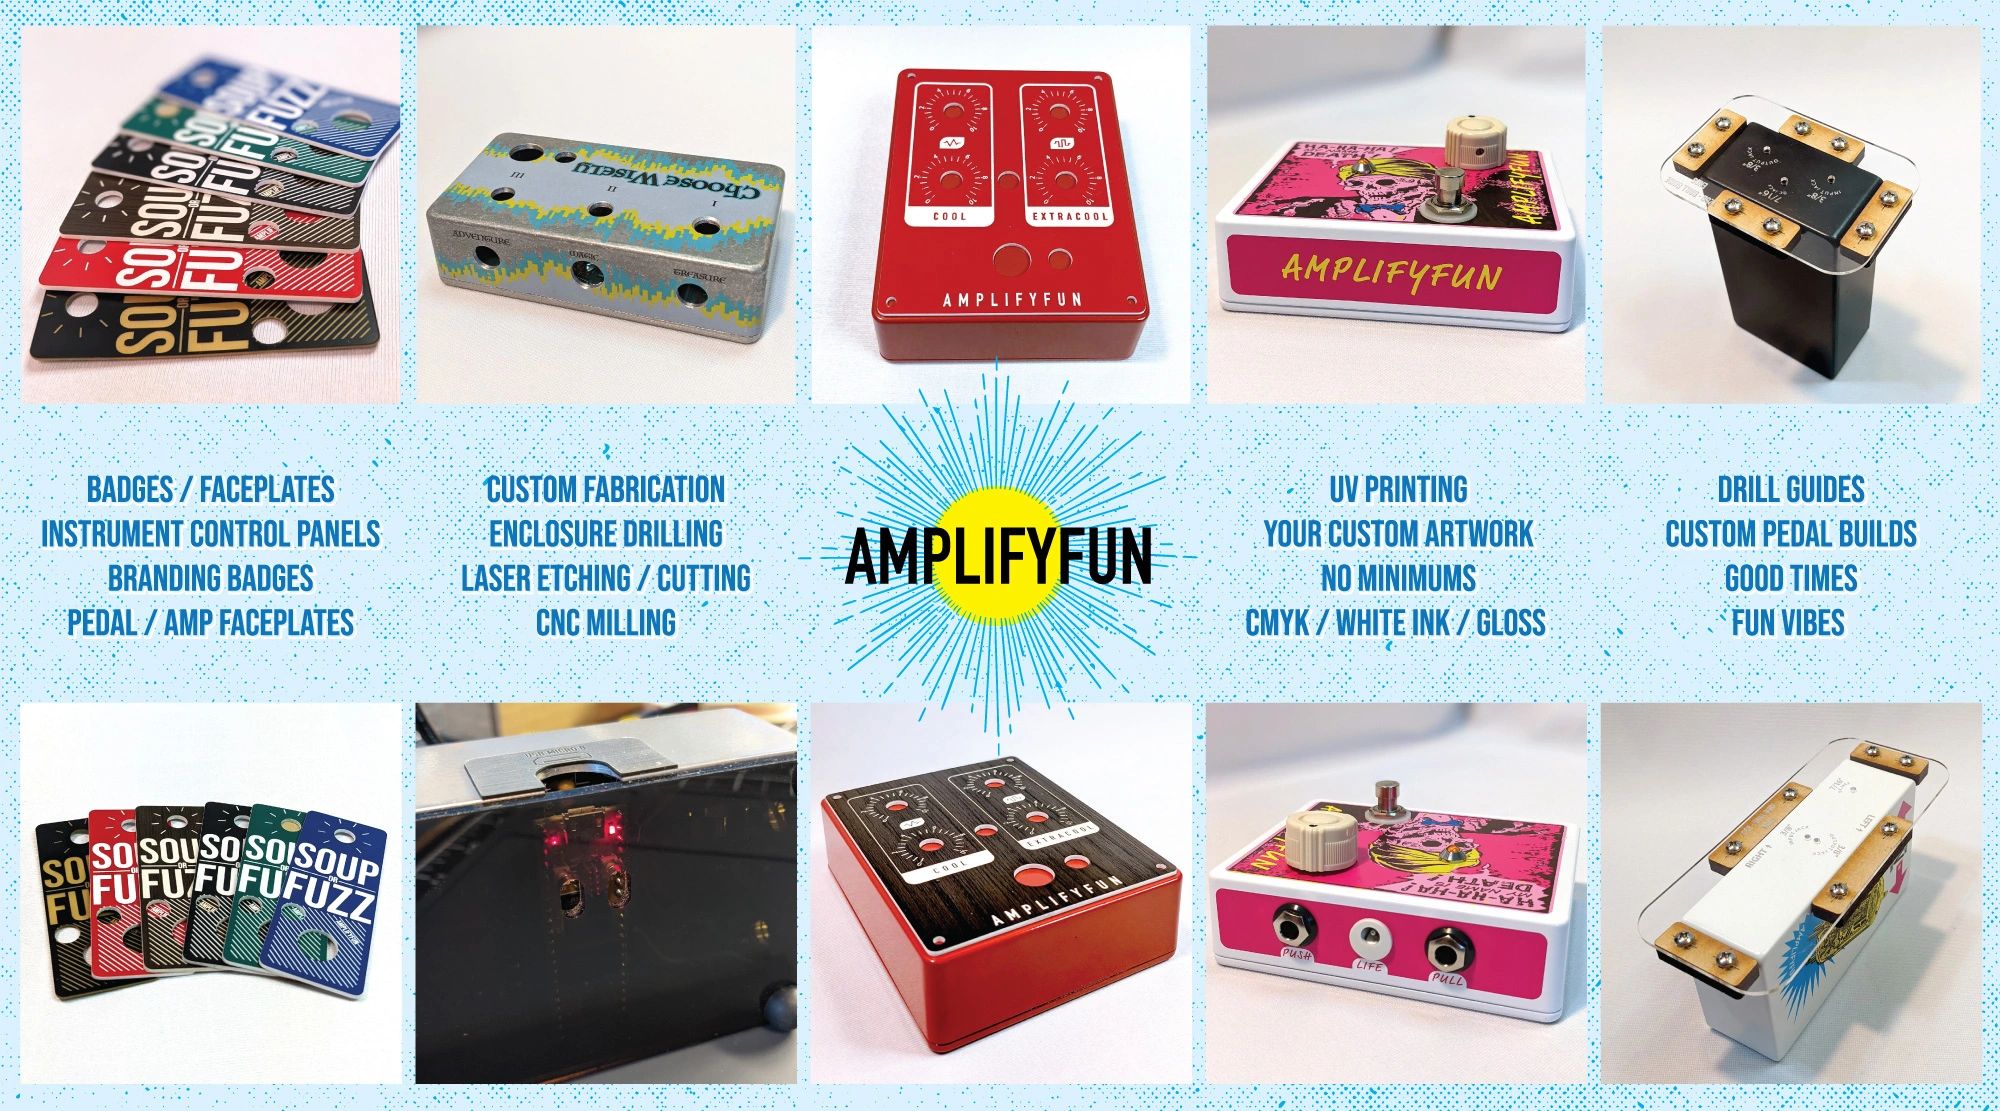 amplifyfun.com